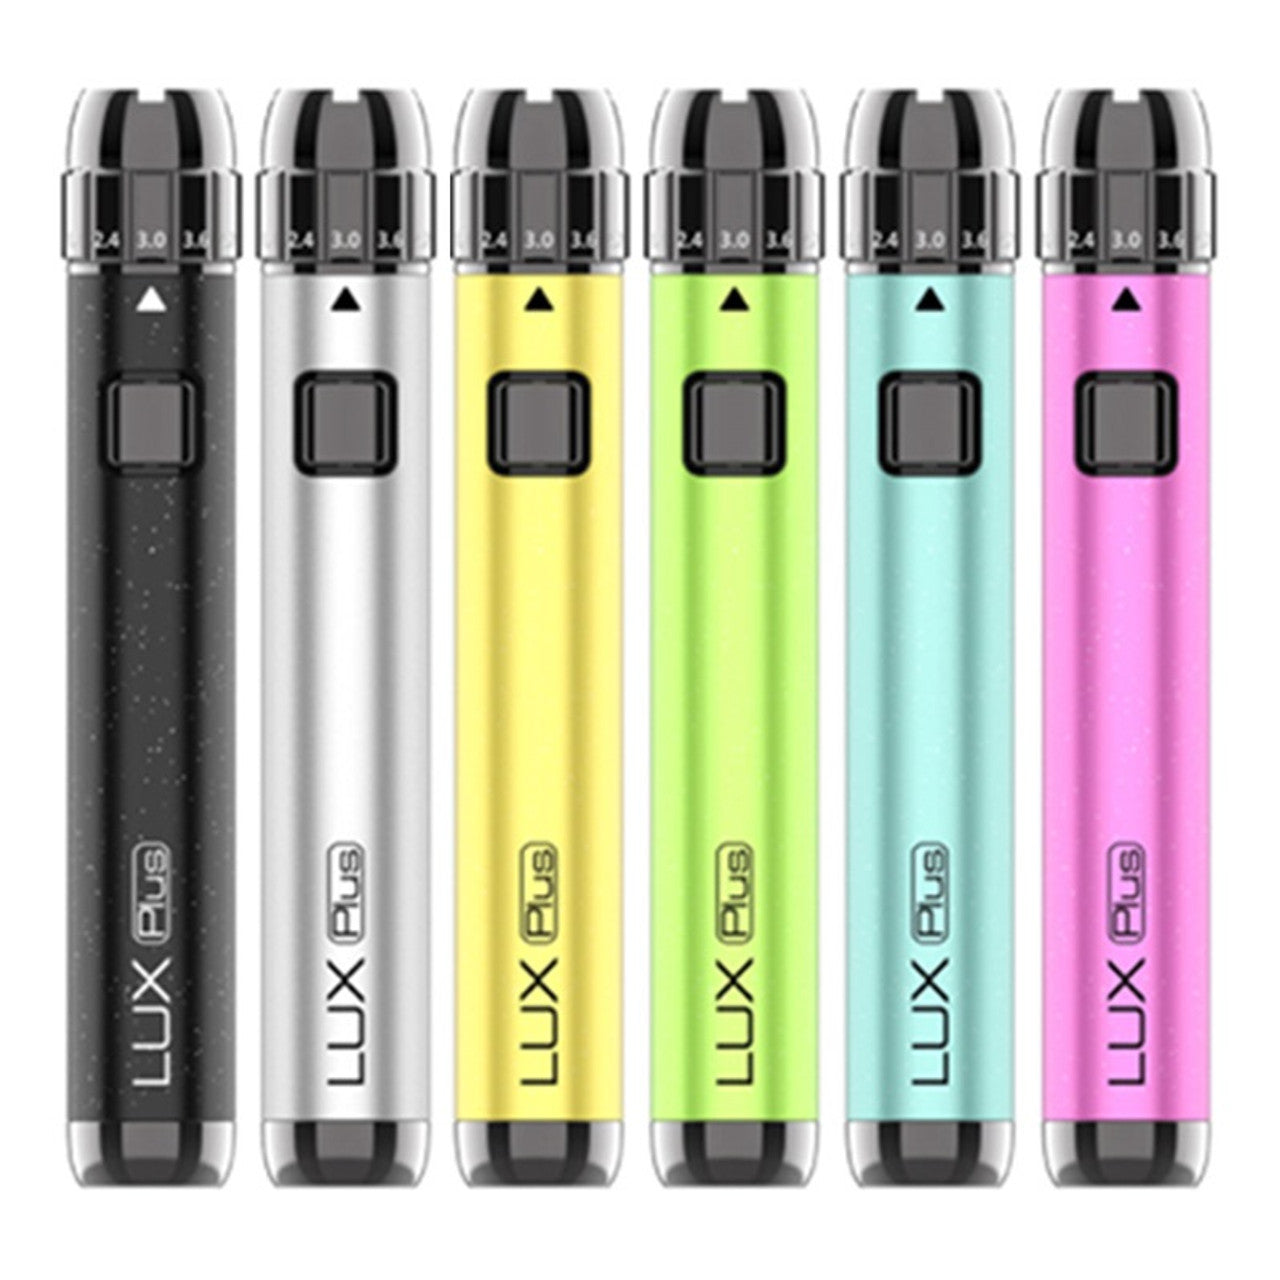 Yocan Lux Plus 650mAh Carto Battery